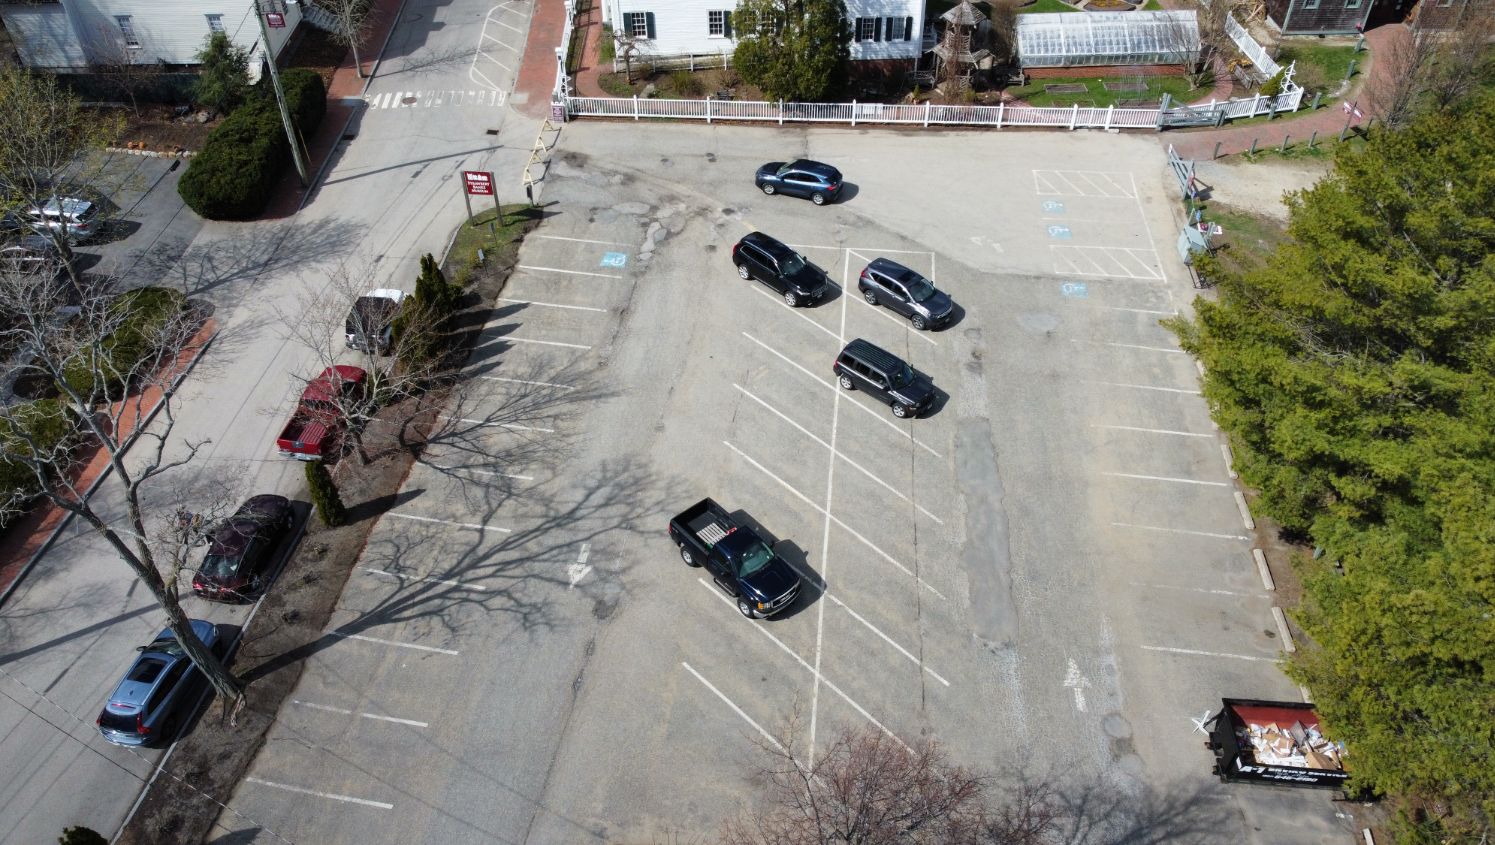 strawbery banke museum parking lot needing re-striped